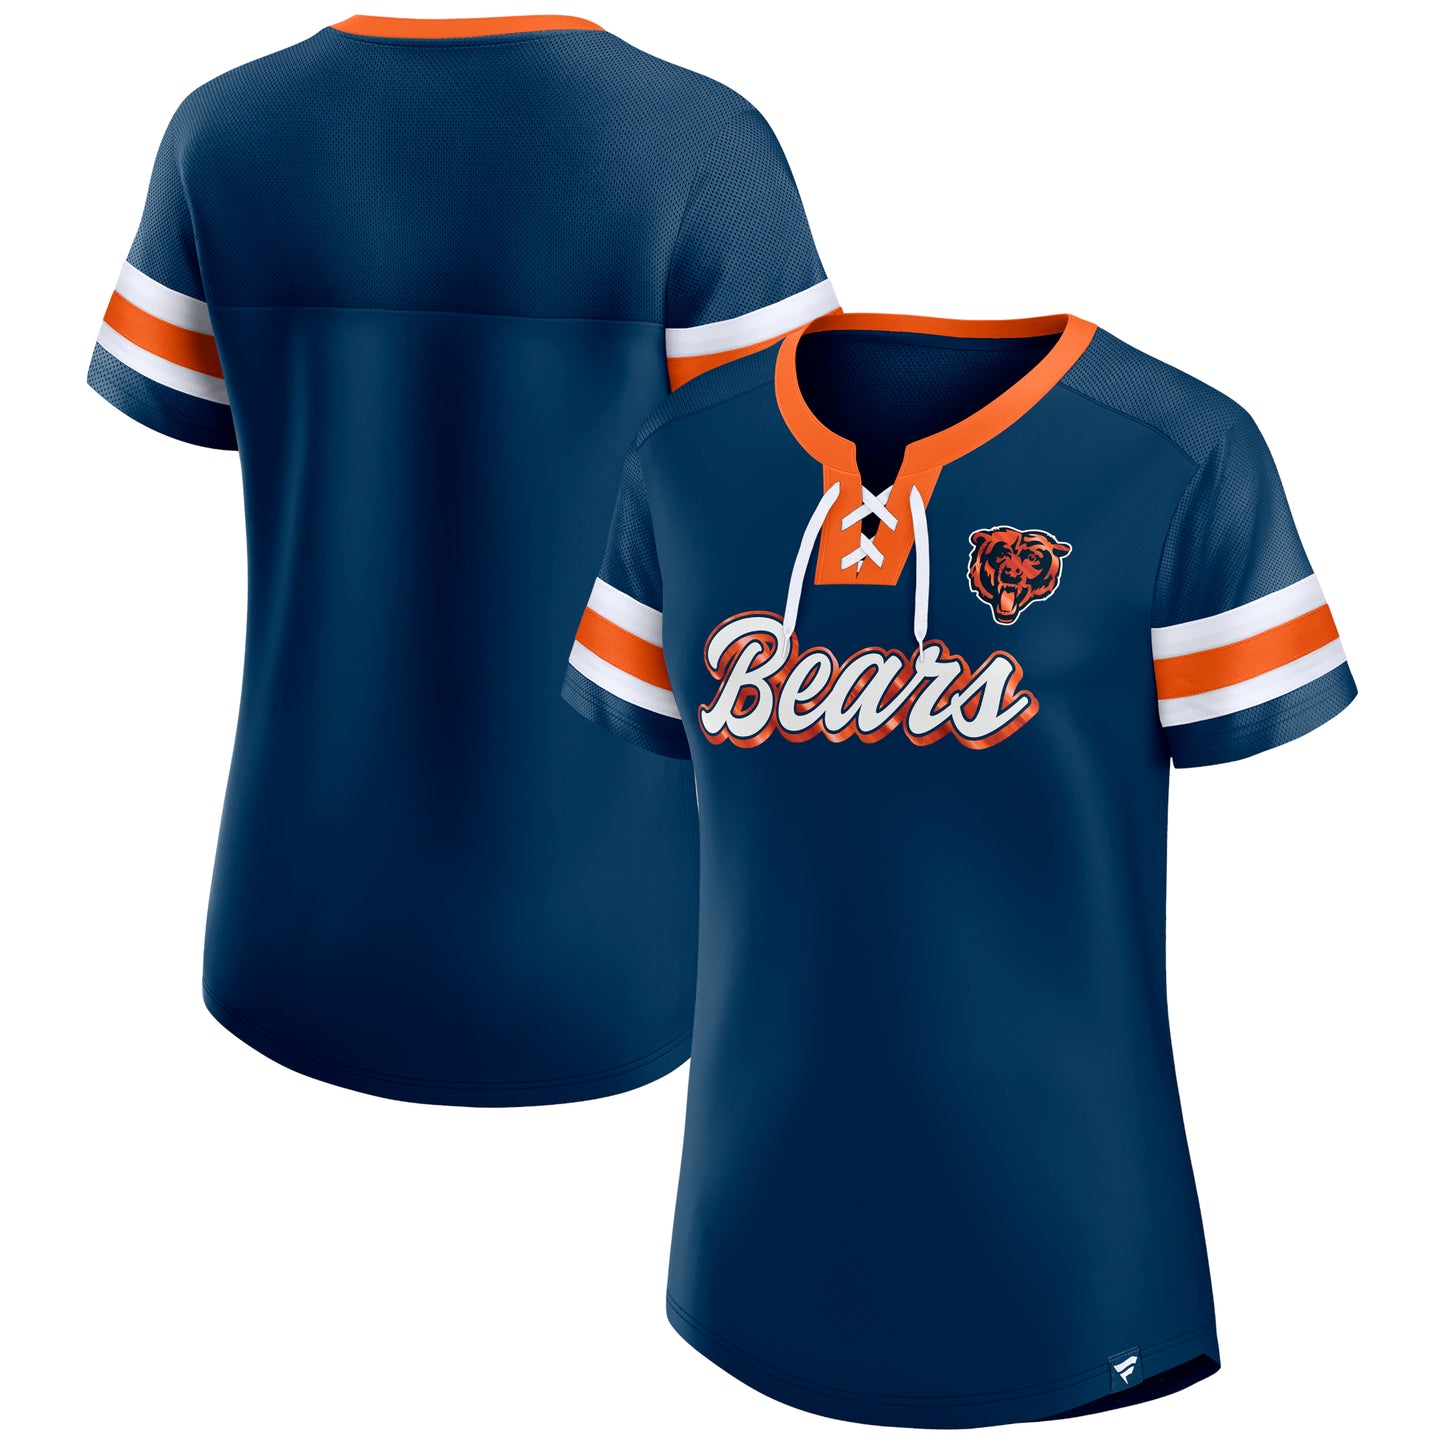 Chicago Bears Iconic Team Athena Women's Shirt